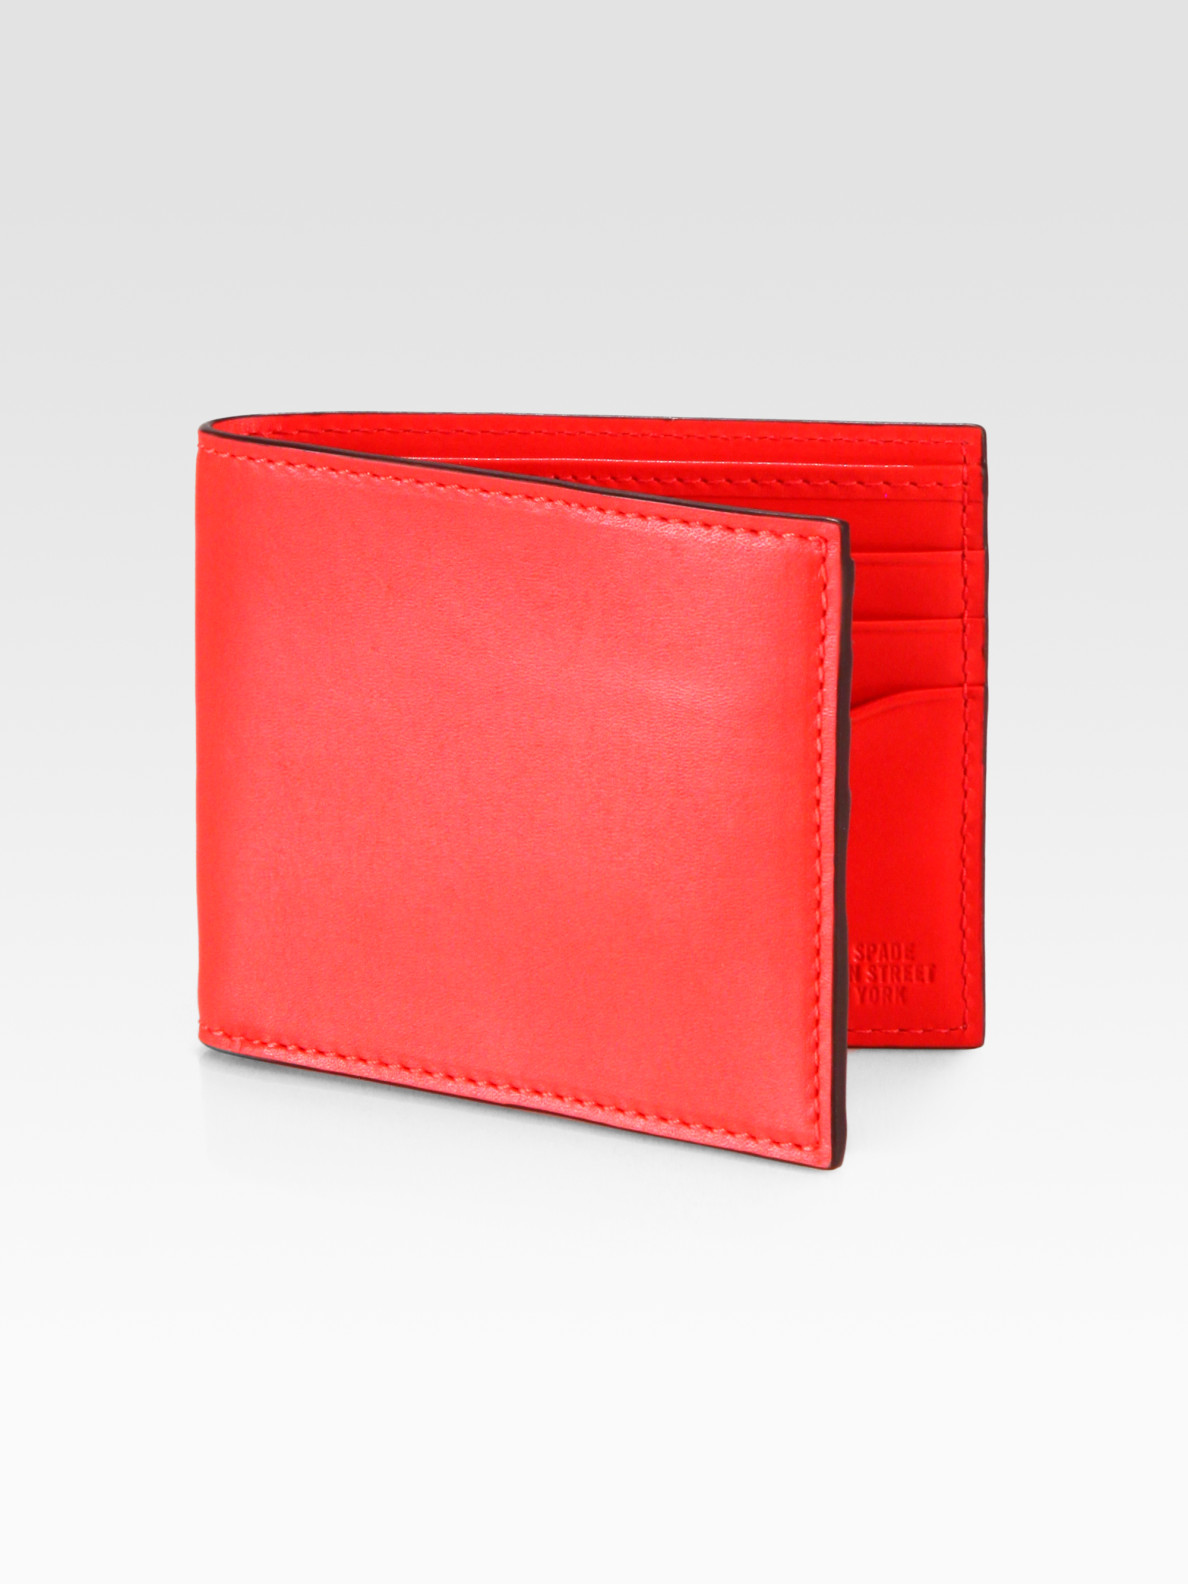 Jack Spade Leather Billfold Wallet in Red for Men | Lyst